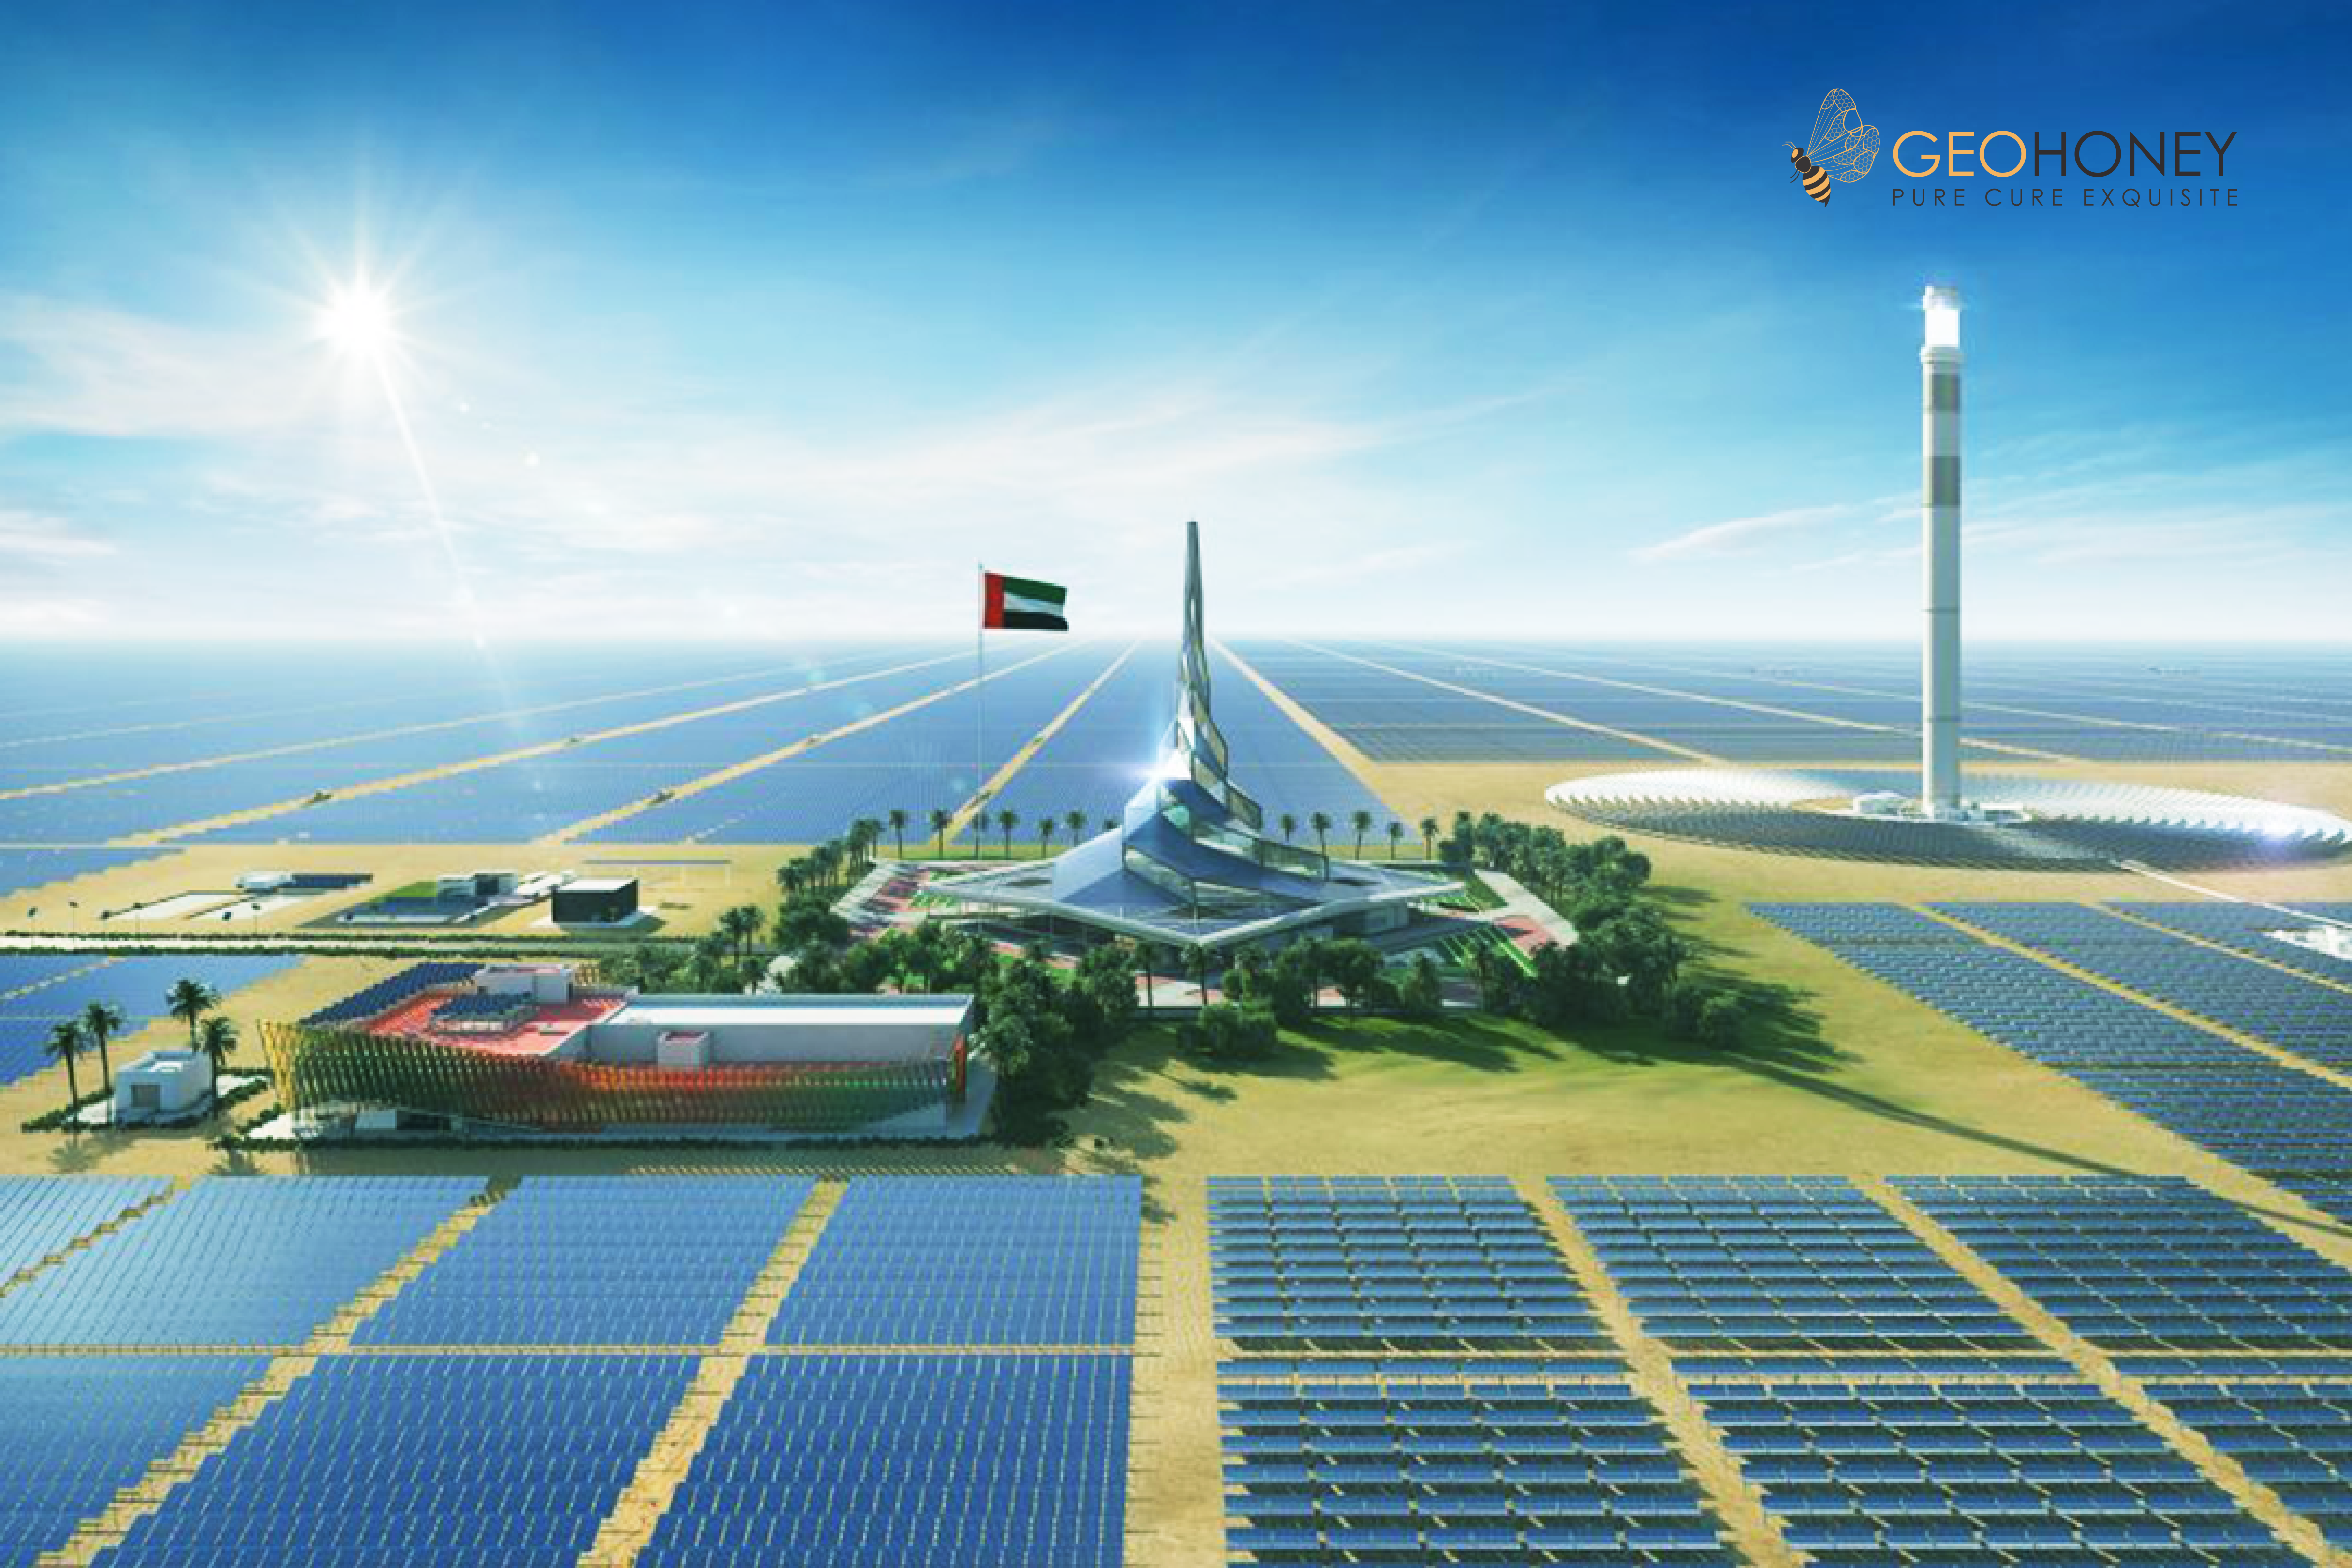 Dubai Progress Towards Clean Energy